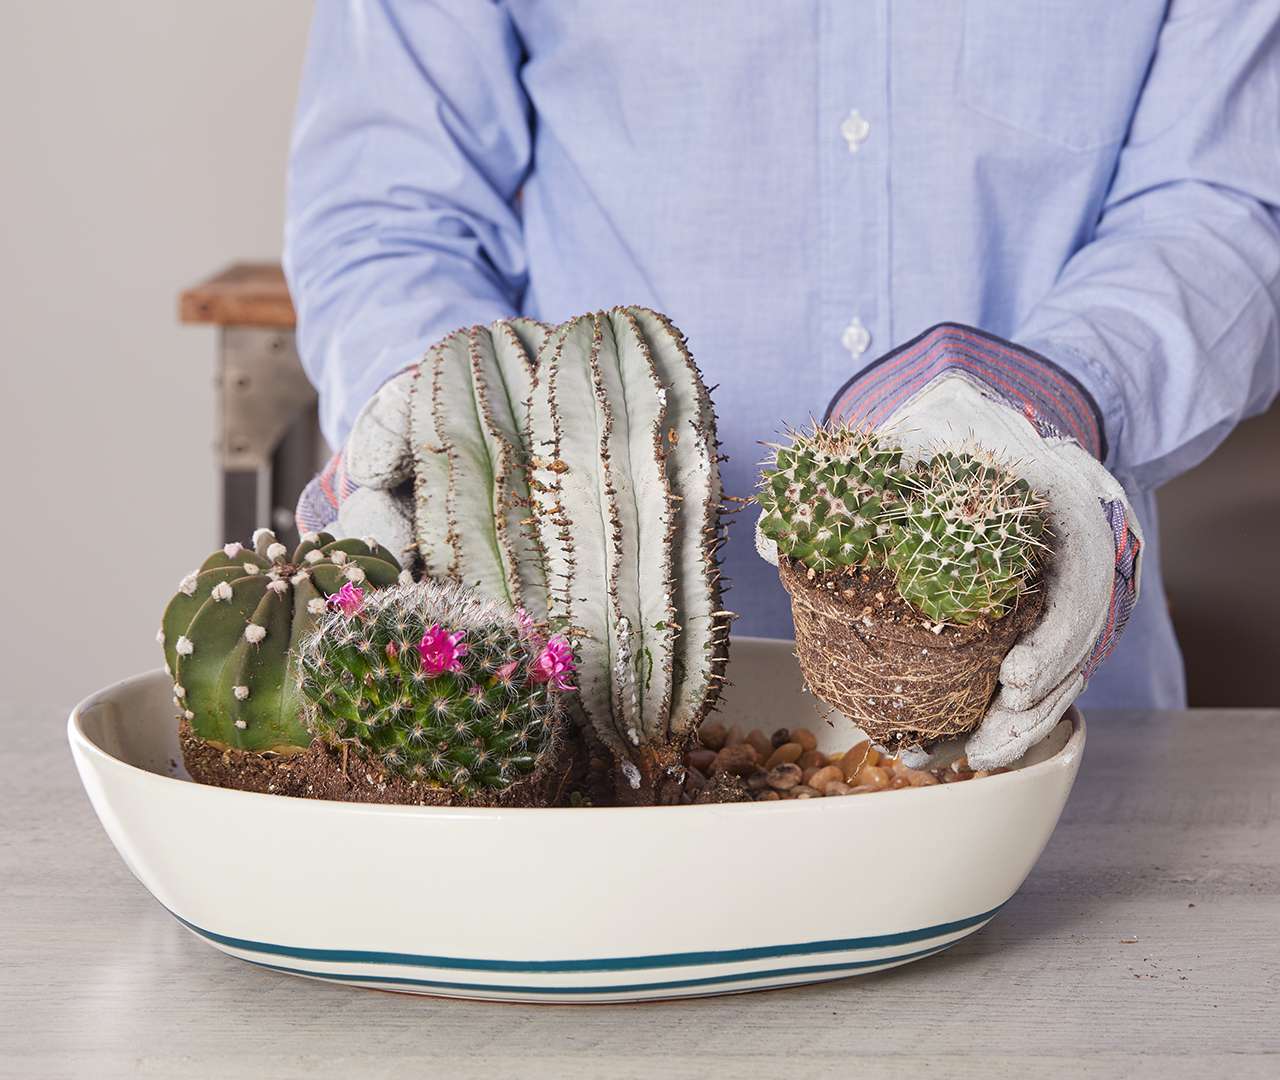 adding cactuses to planter dish